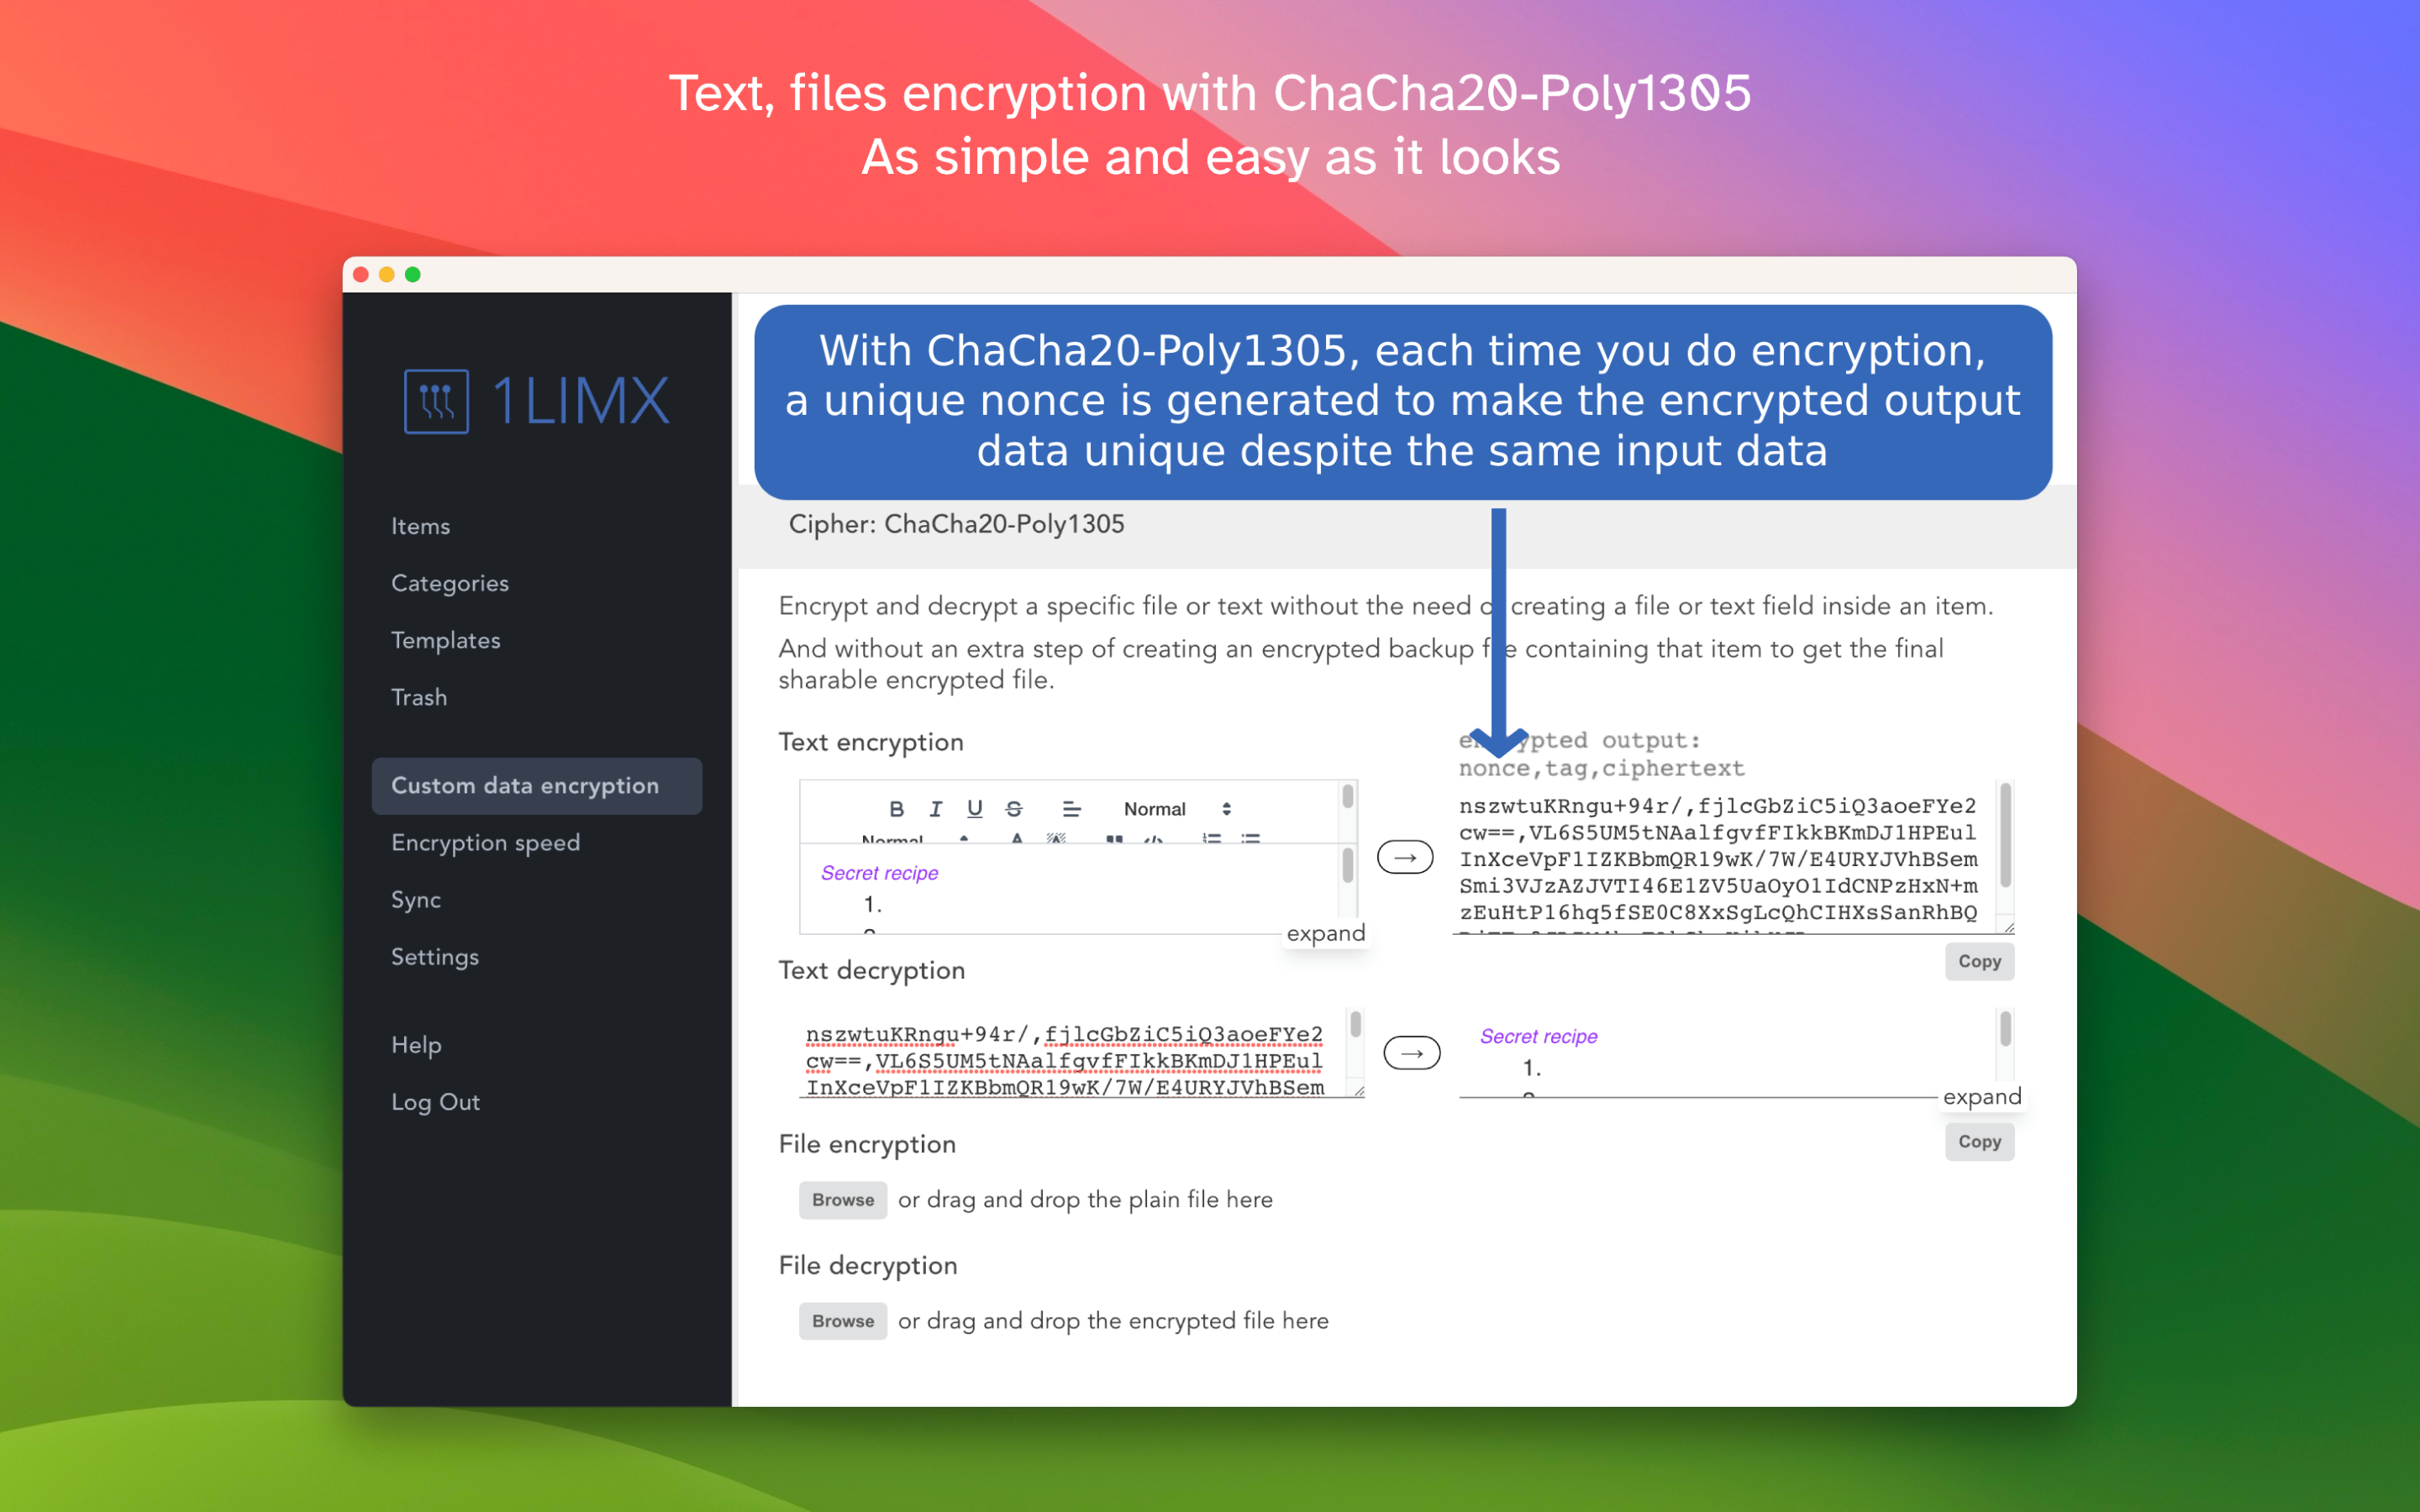 1LimX custom data encryption pc